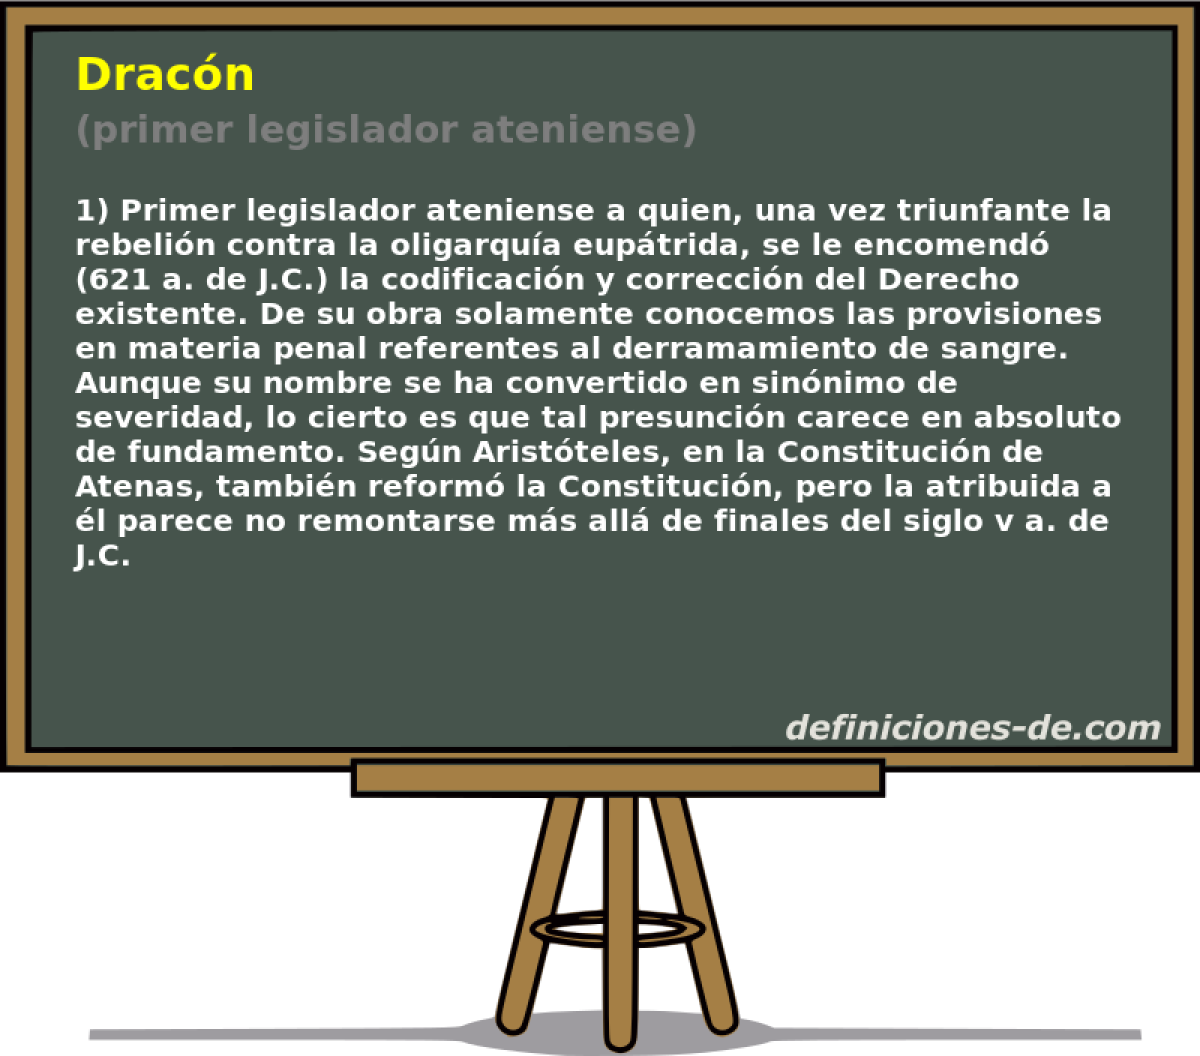 Dracn (primer legislador ateniense)